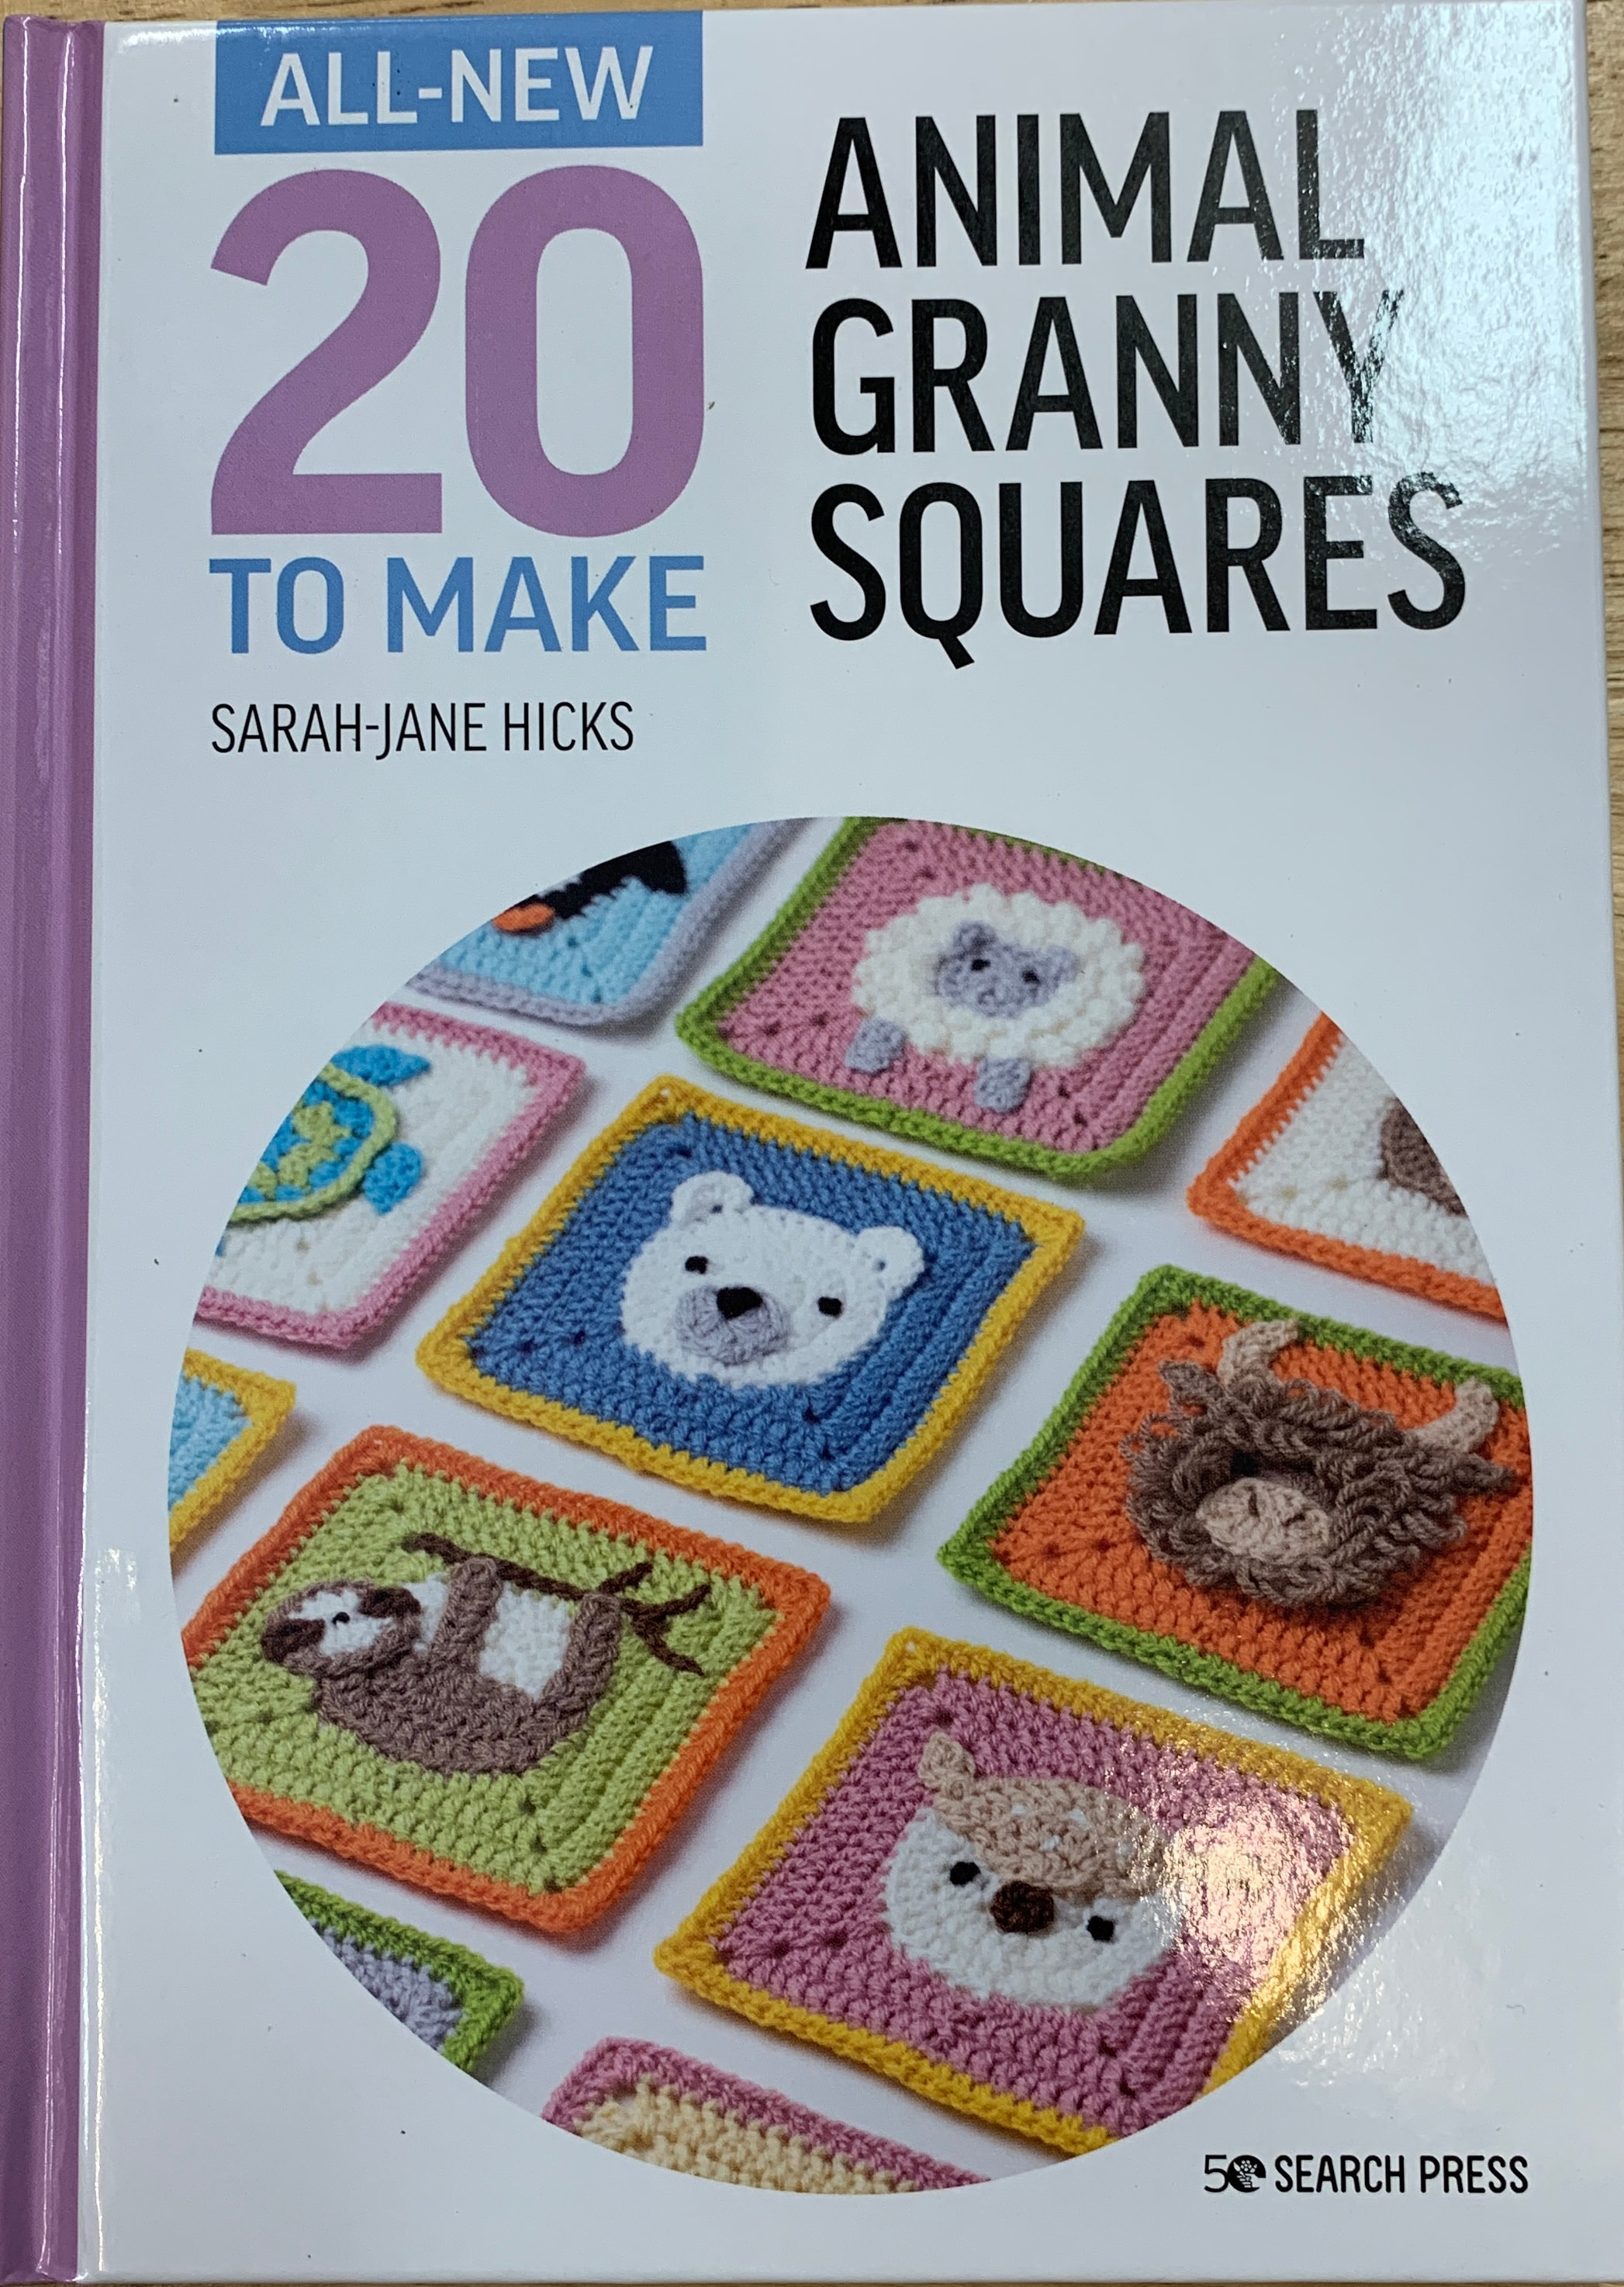 All-New Twenty to Make: Animal Granny Squares [Book]